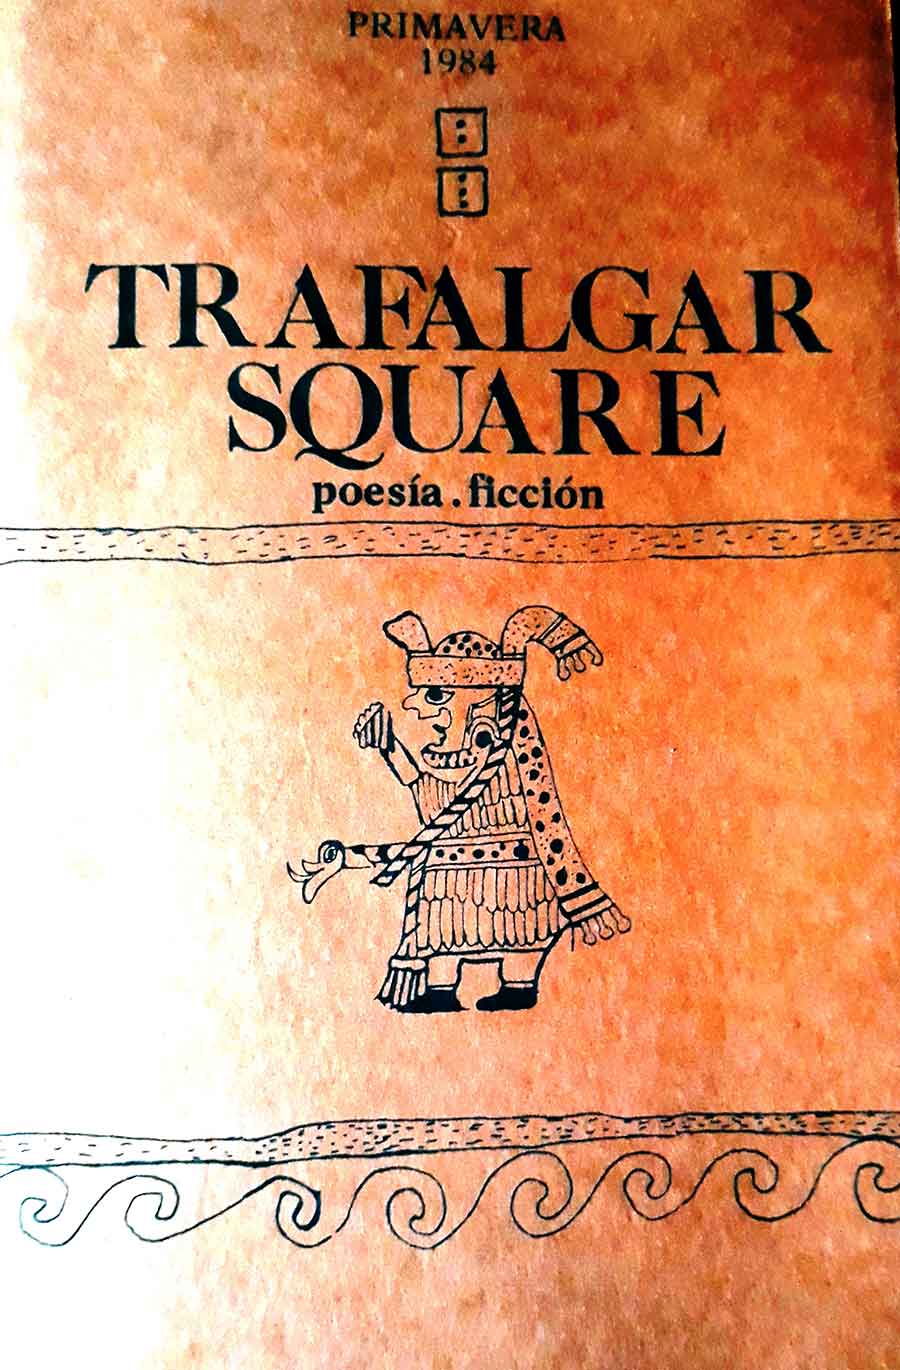 Trafalgar Square. Barcelona 1984.